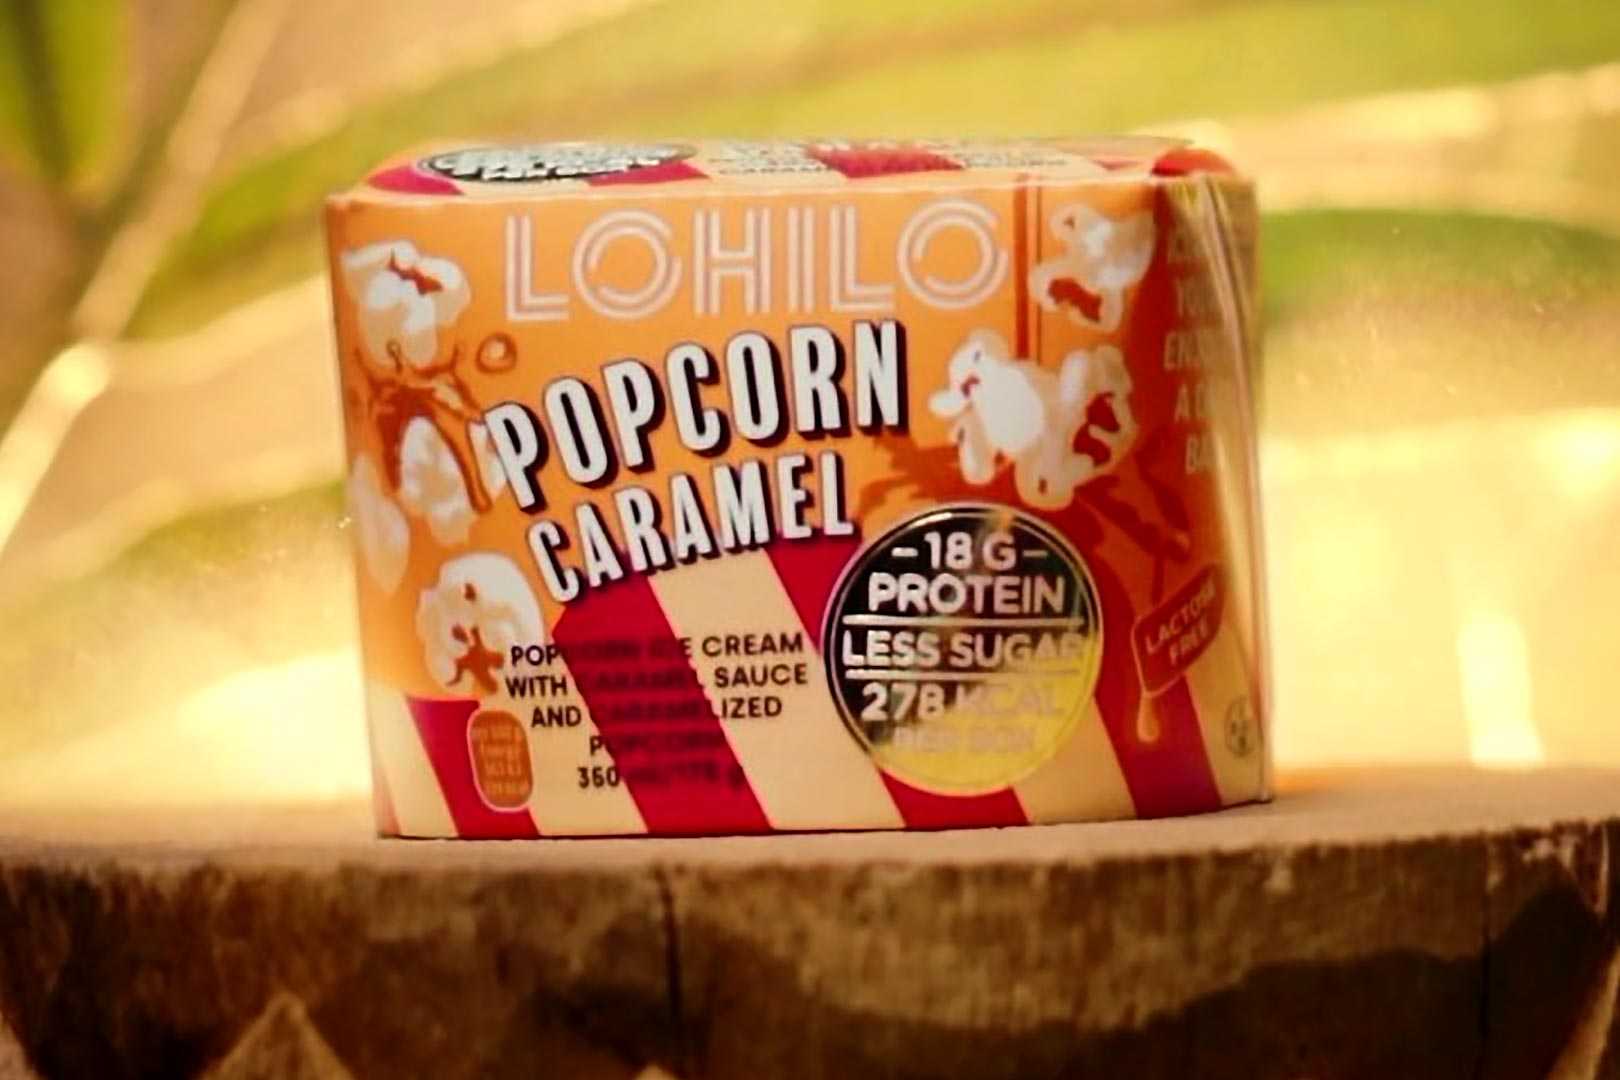 Lohilo Popcorn Caramel Ice Cream